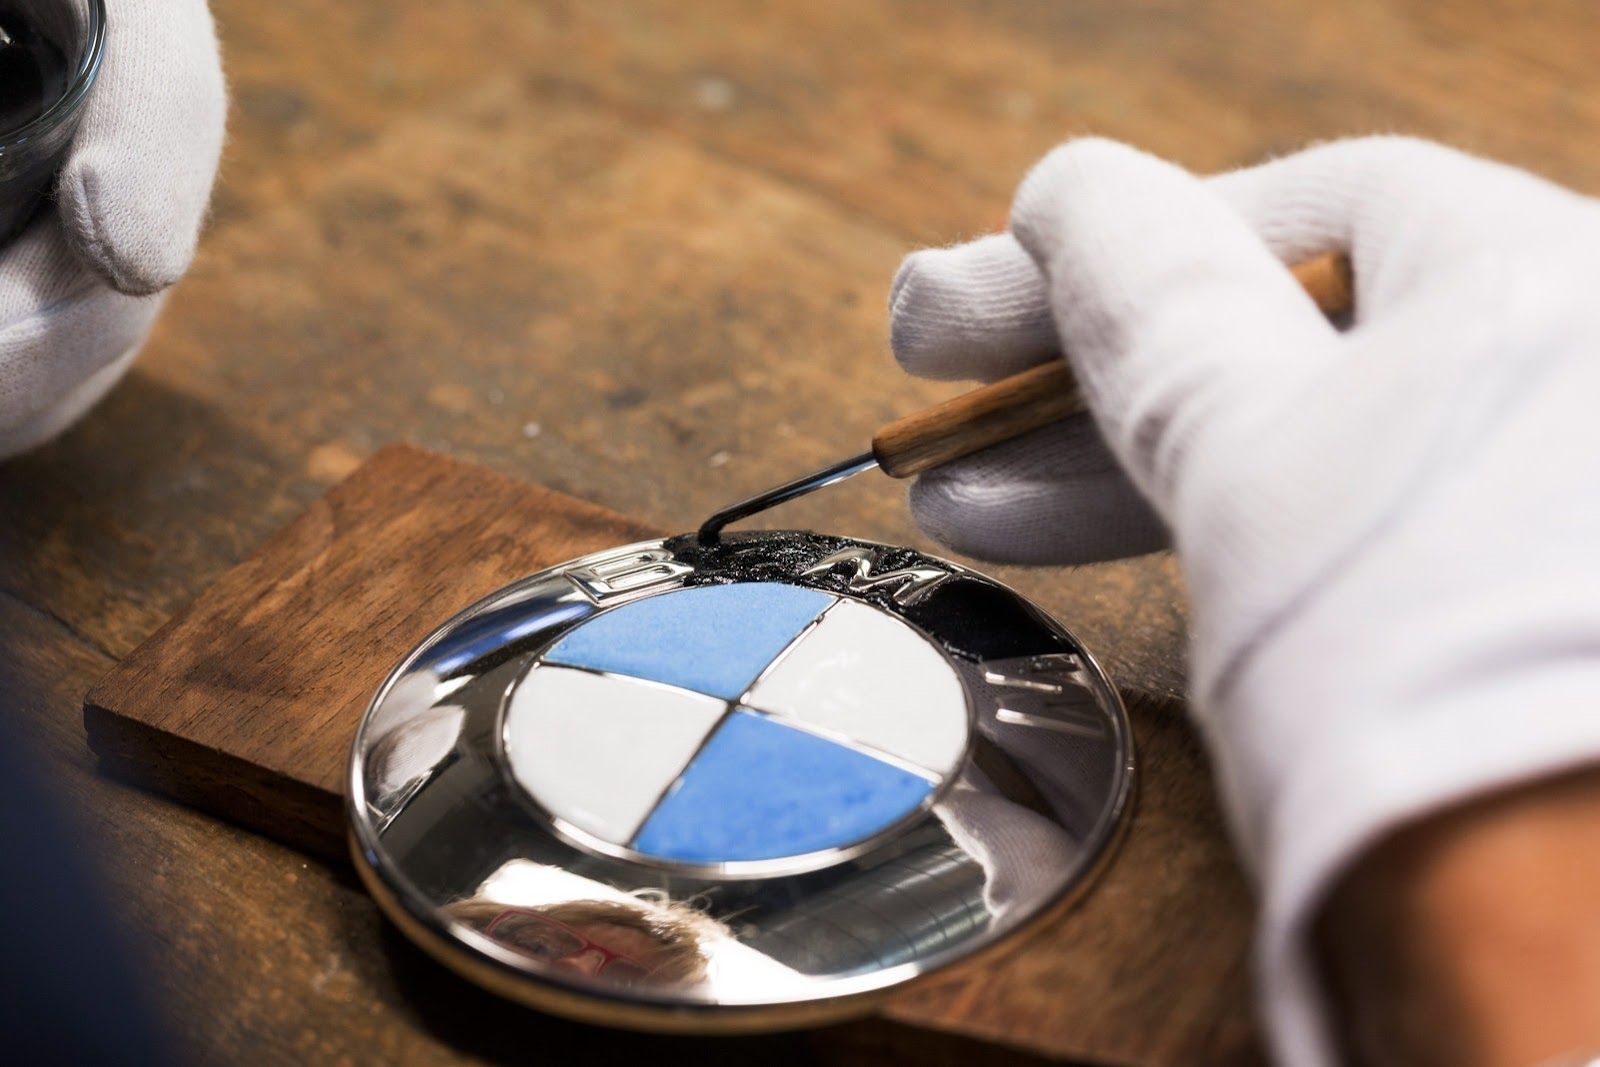 BMW представила самую дорогую "семерку"